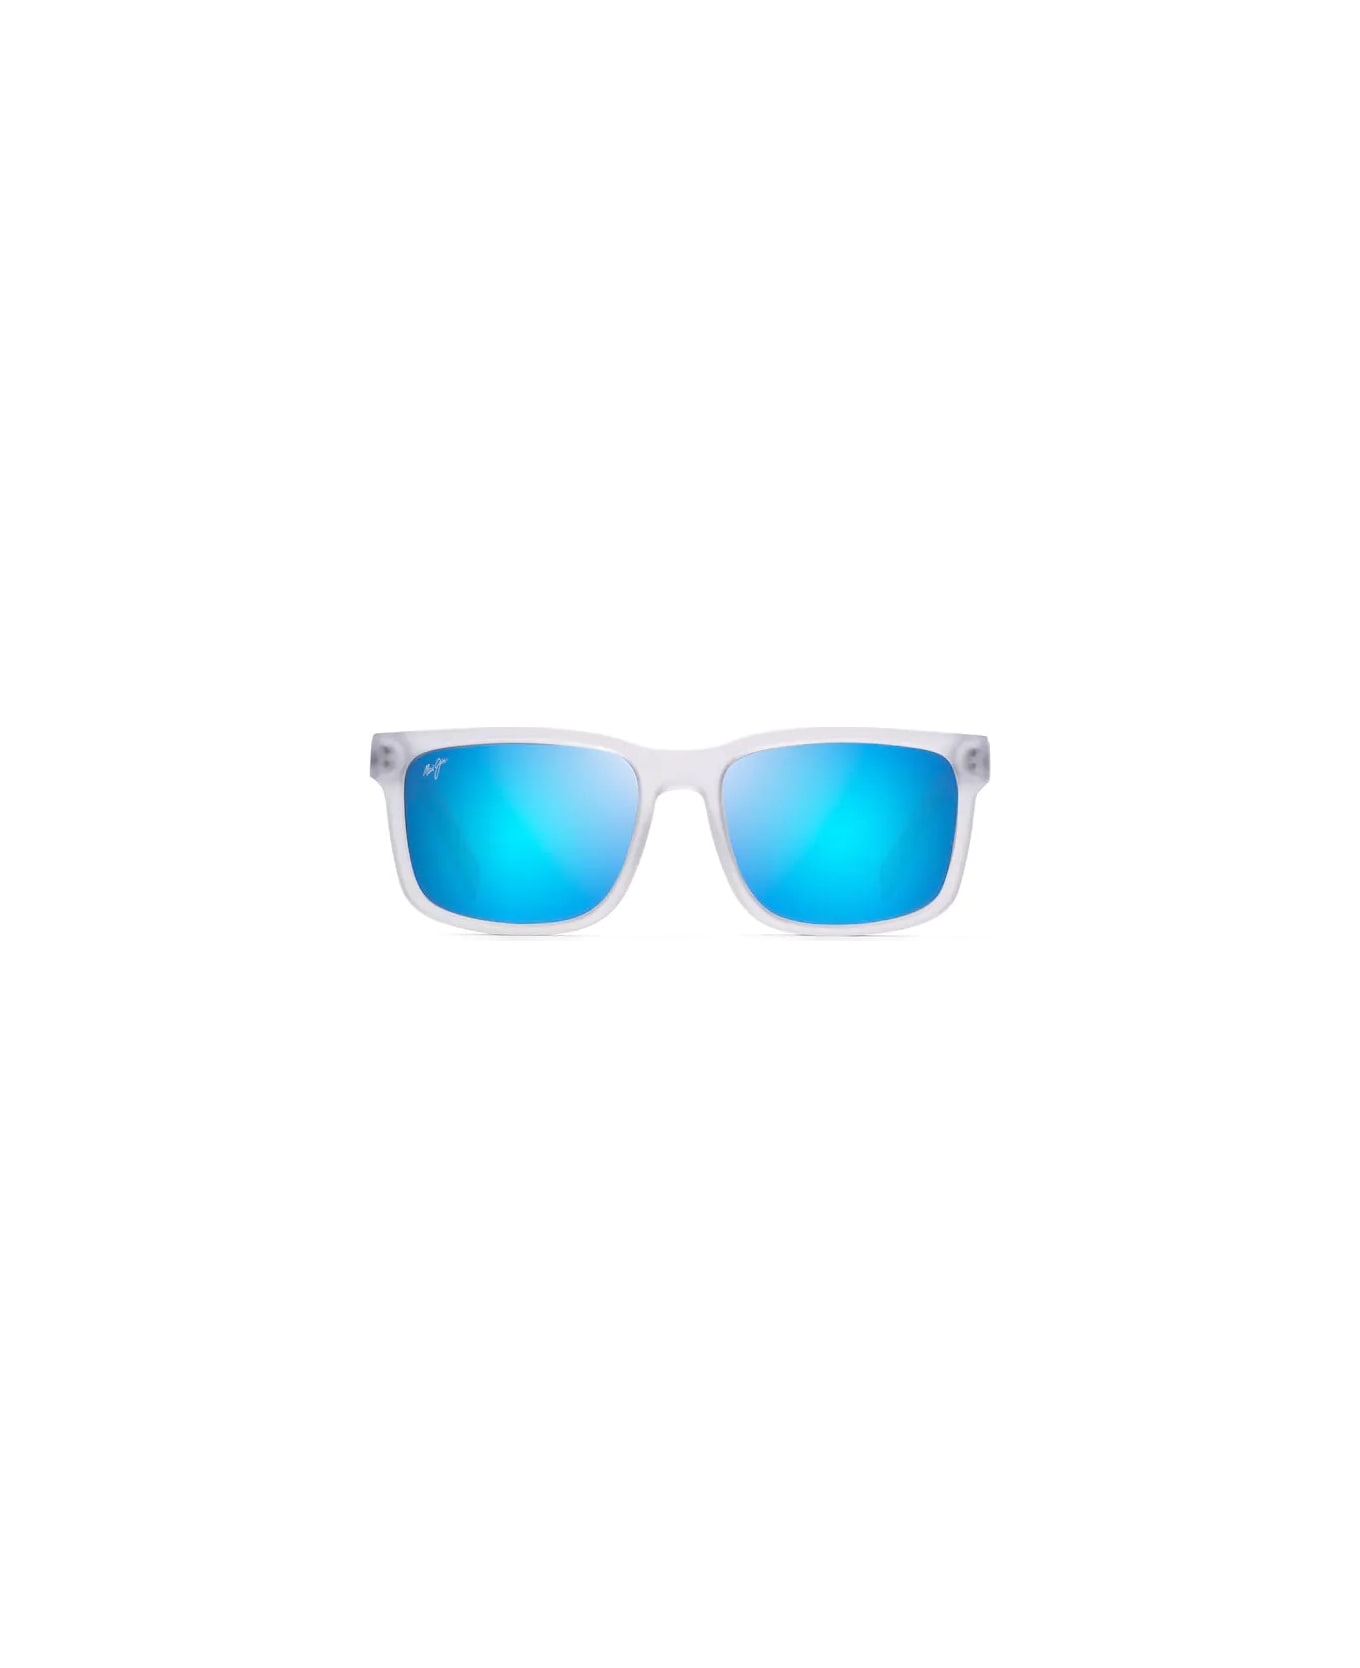 Maui Jim Stone Shack 862 05 Sunglasses - Cristallo opaco